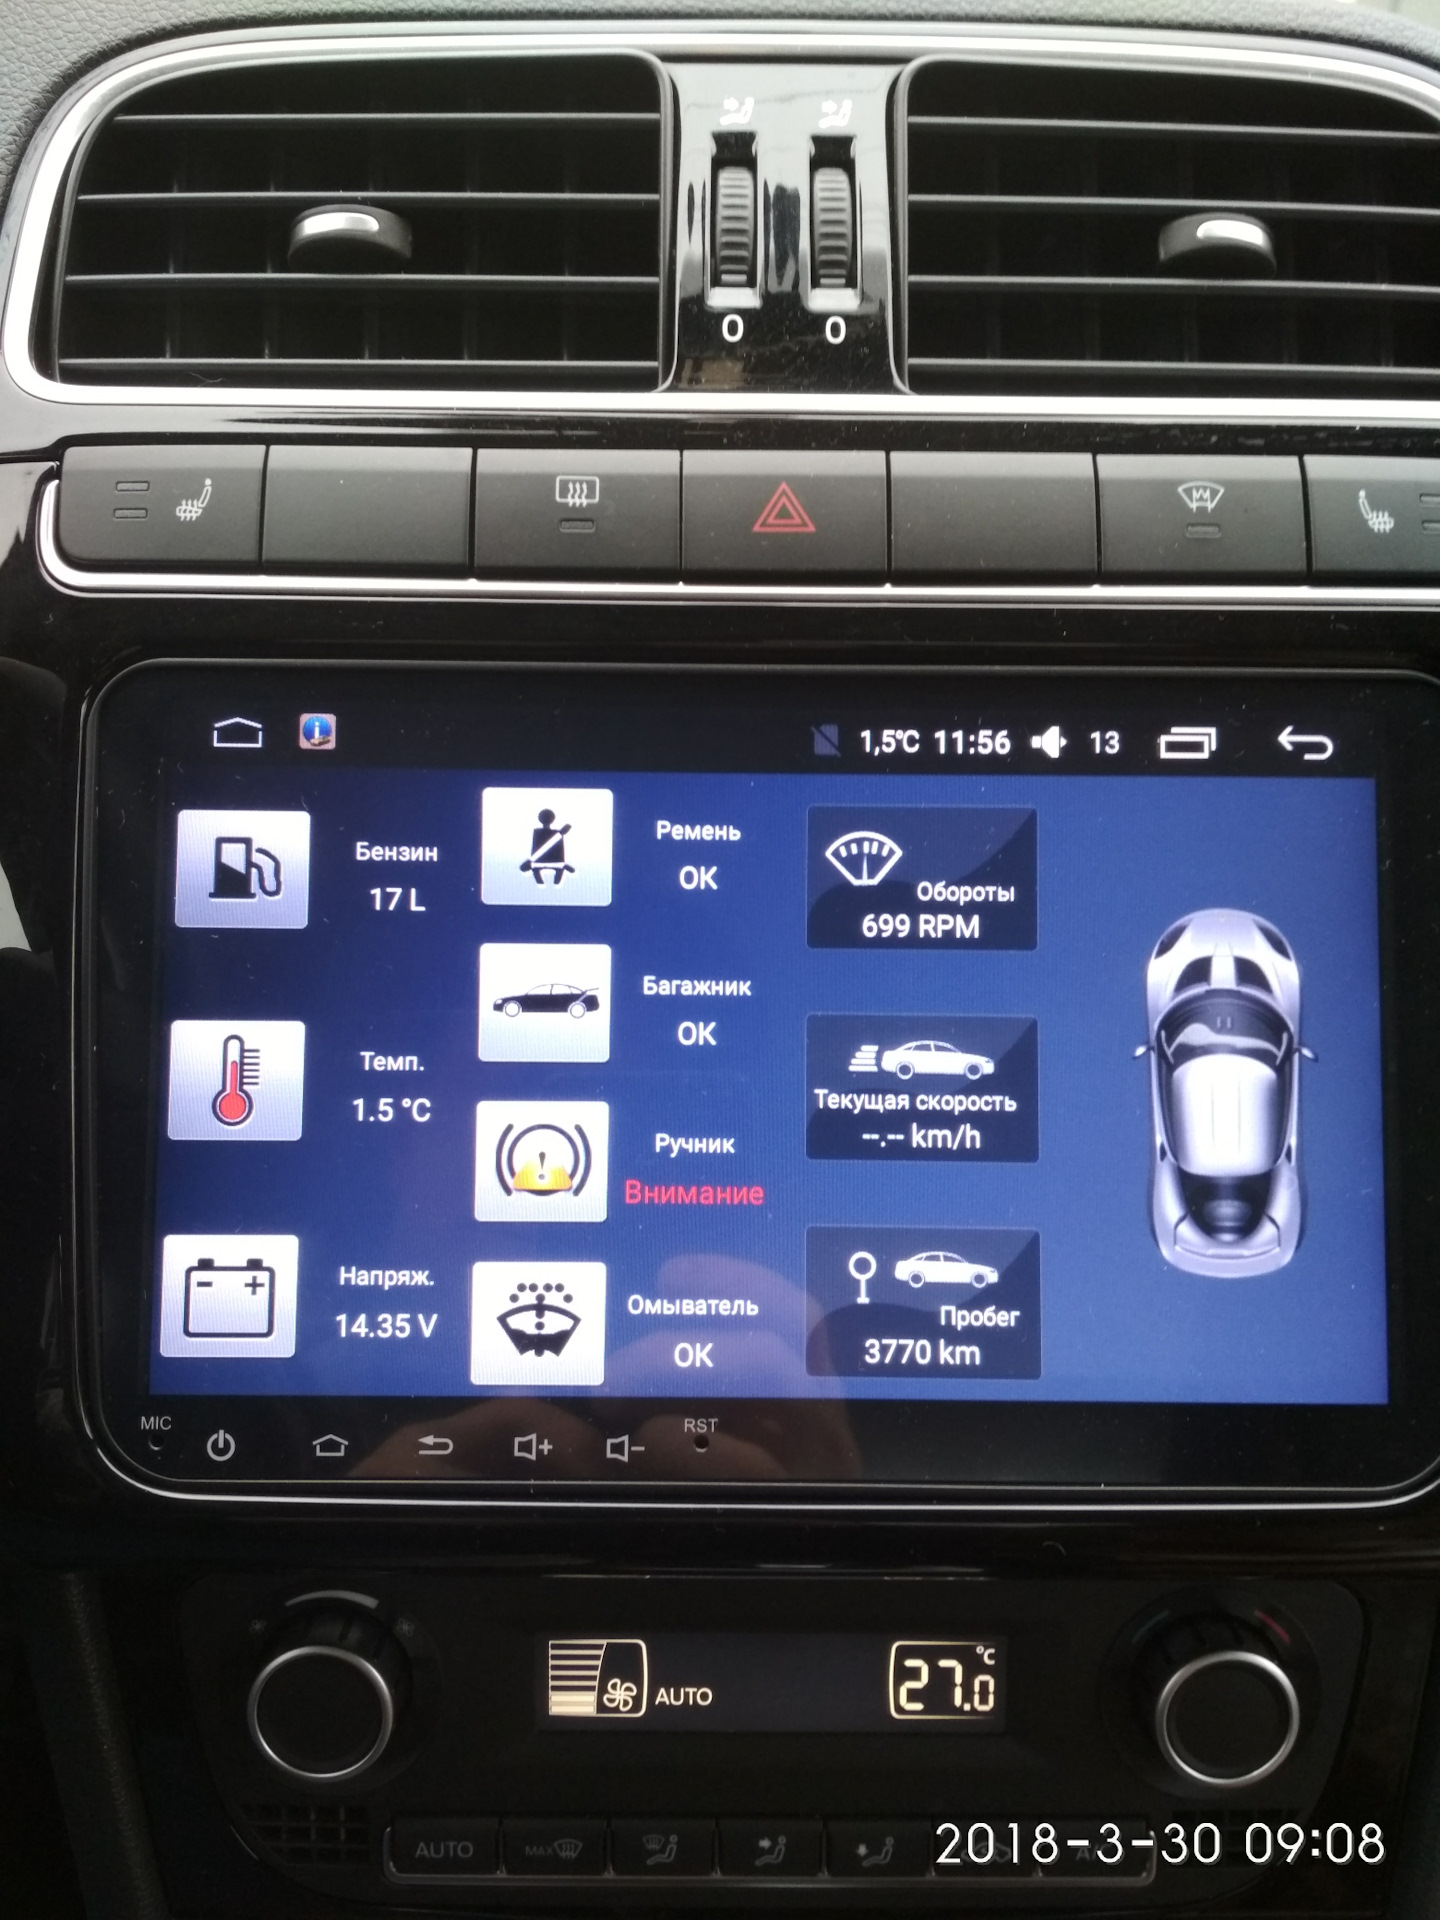 Топ магнитол на андроиде. Volkswagen Polo магнитола Android. Андроид магнитола поло седан 2013. Андроид магнитола поло седан 2012. Магнитола Volkswagen Polo sedan Android Tesla.